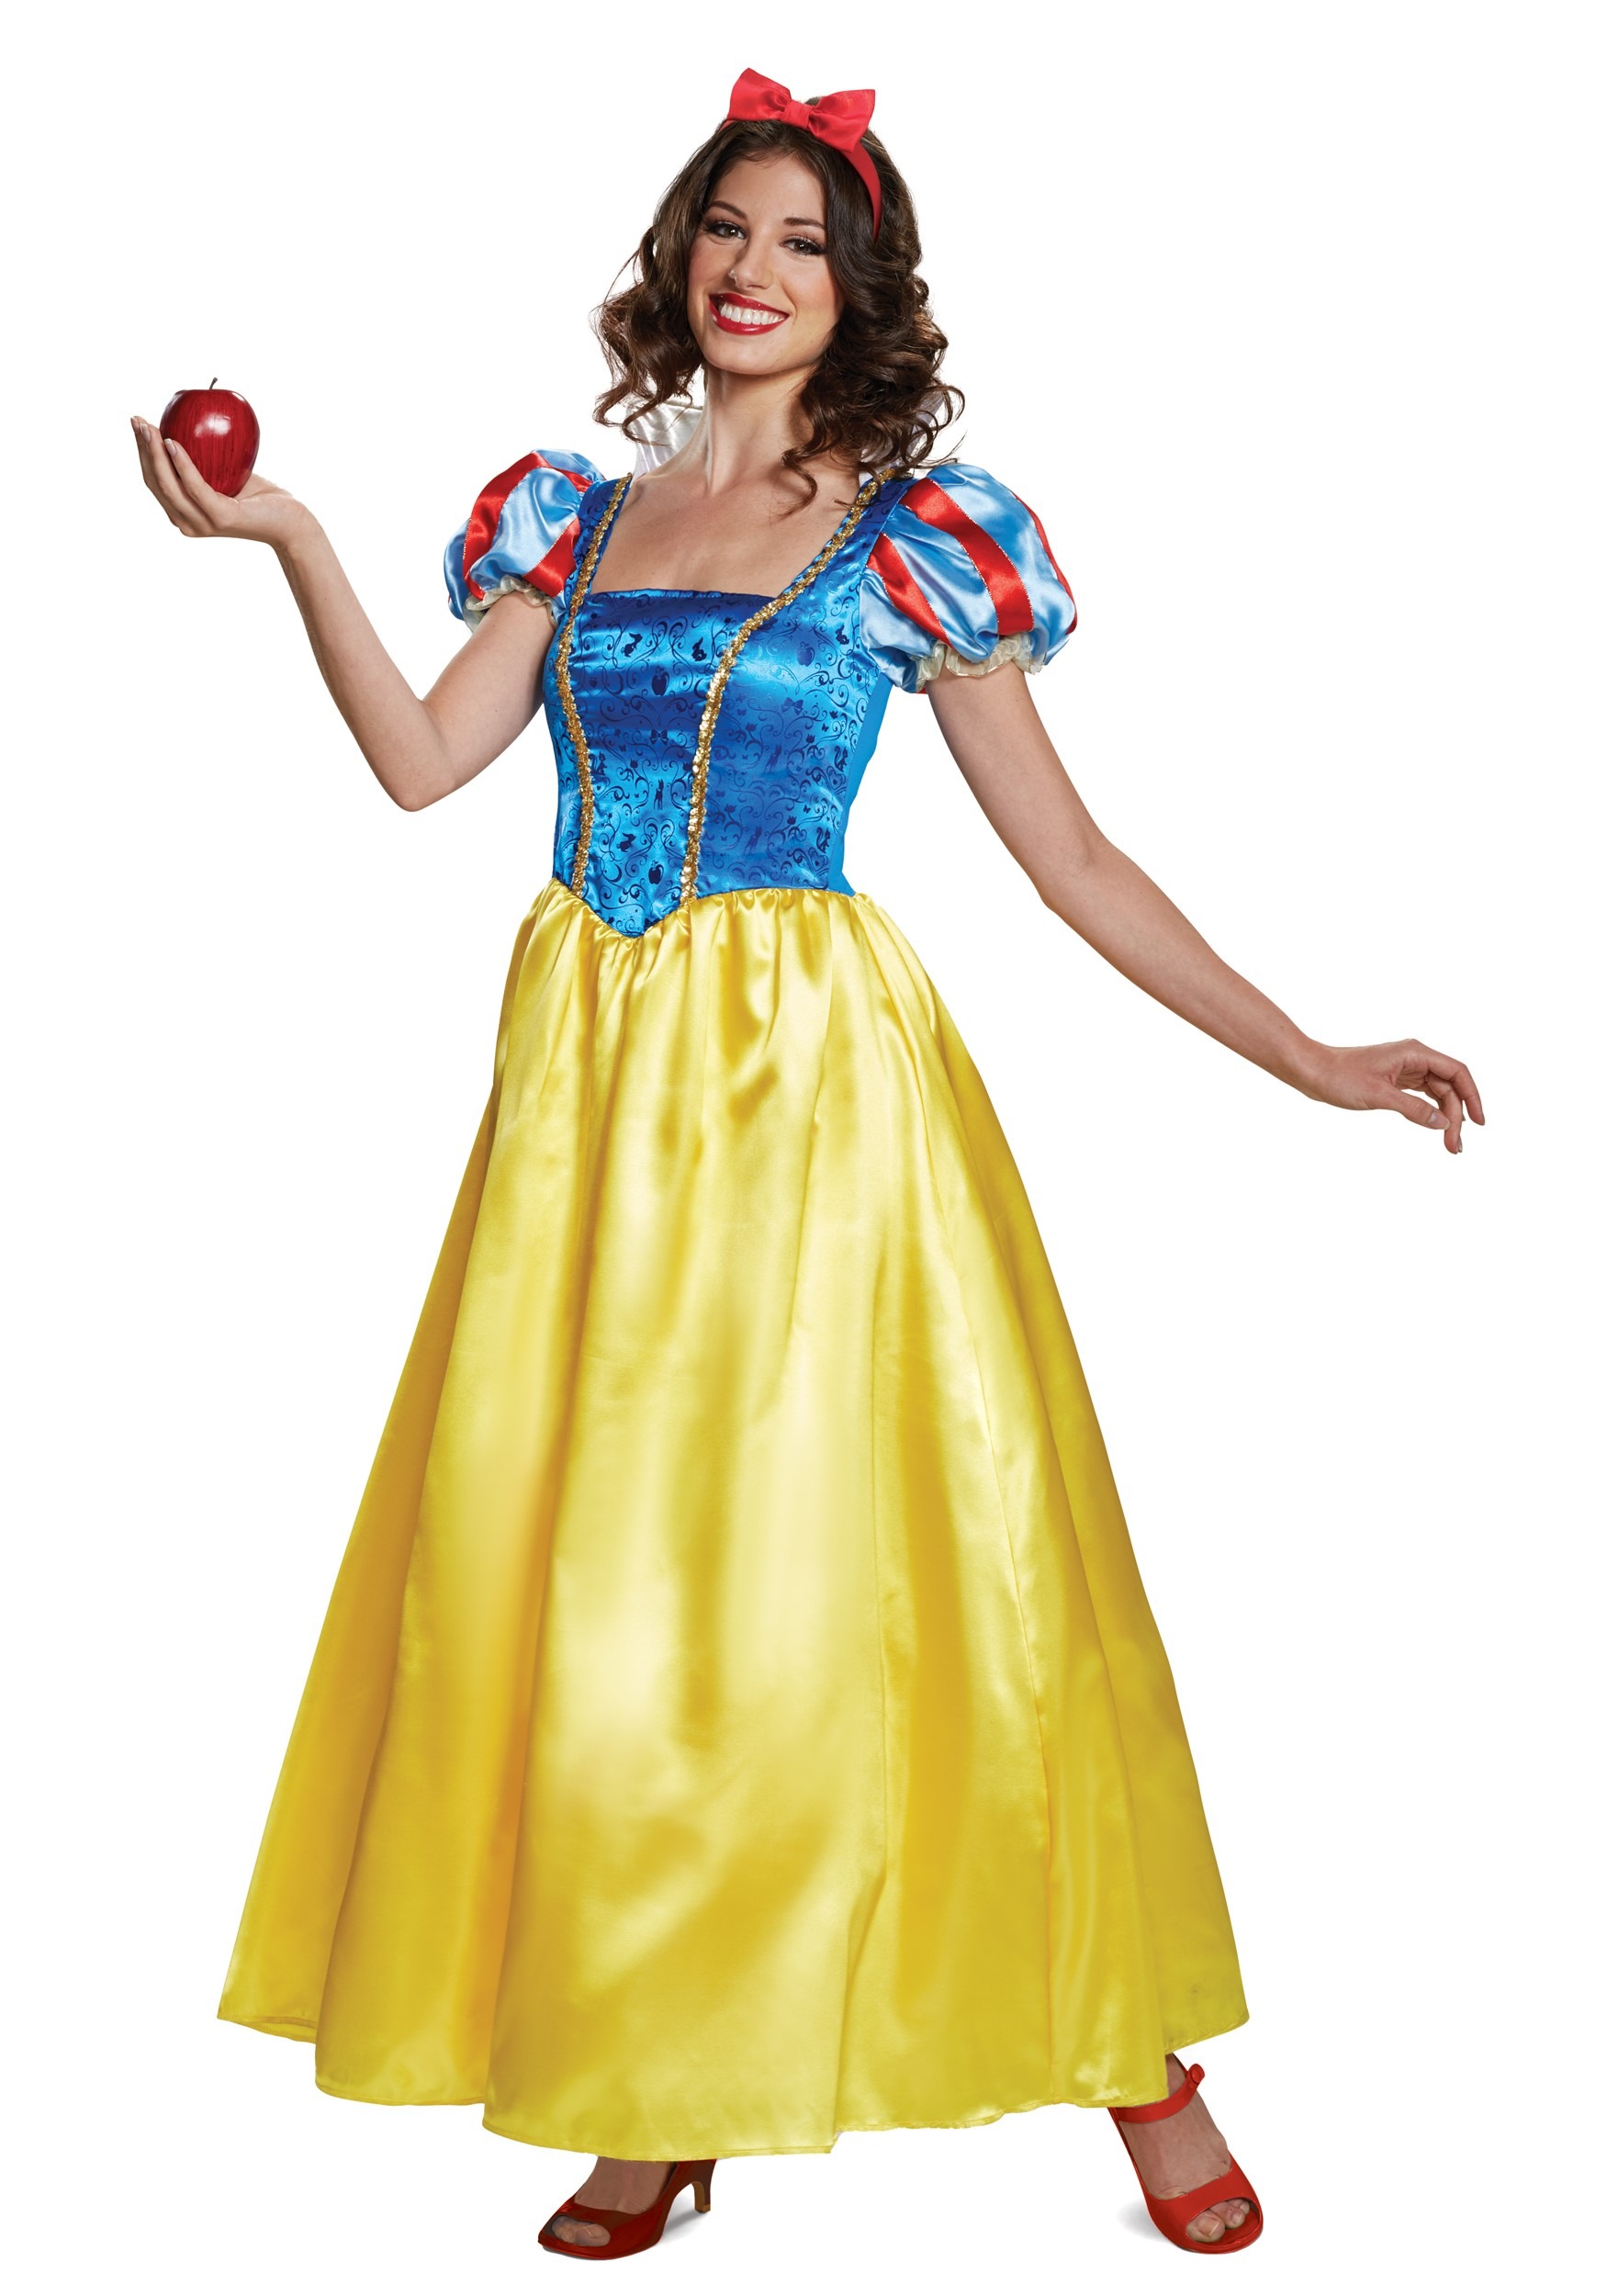 Adult Deluxe Snow White Costume 3669